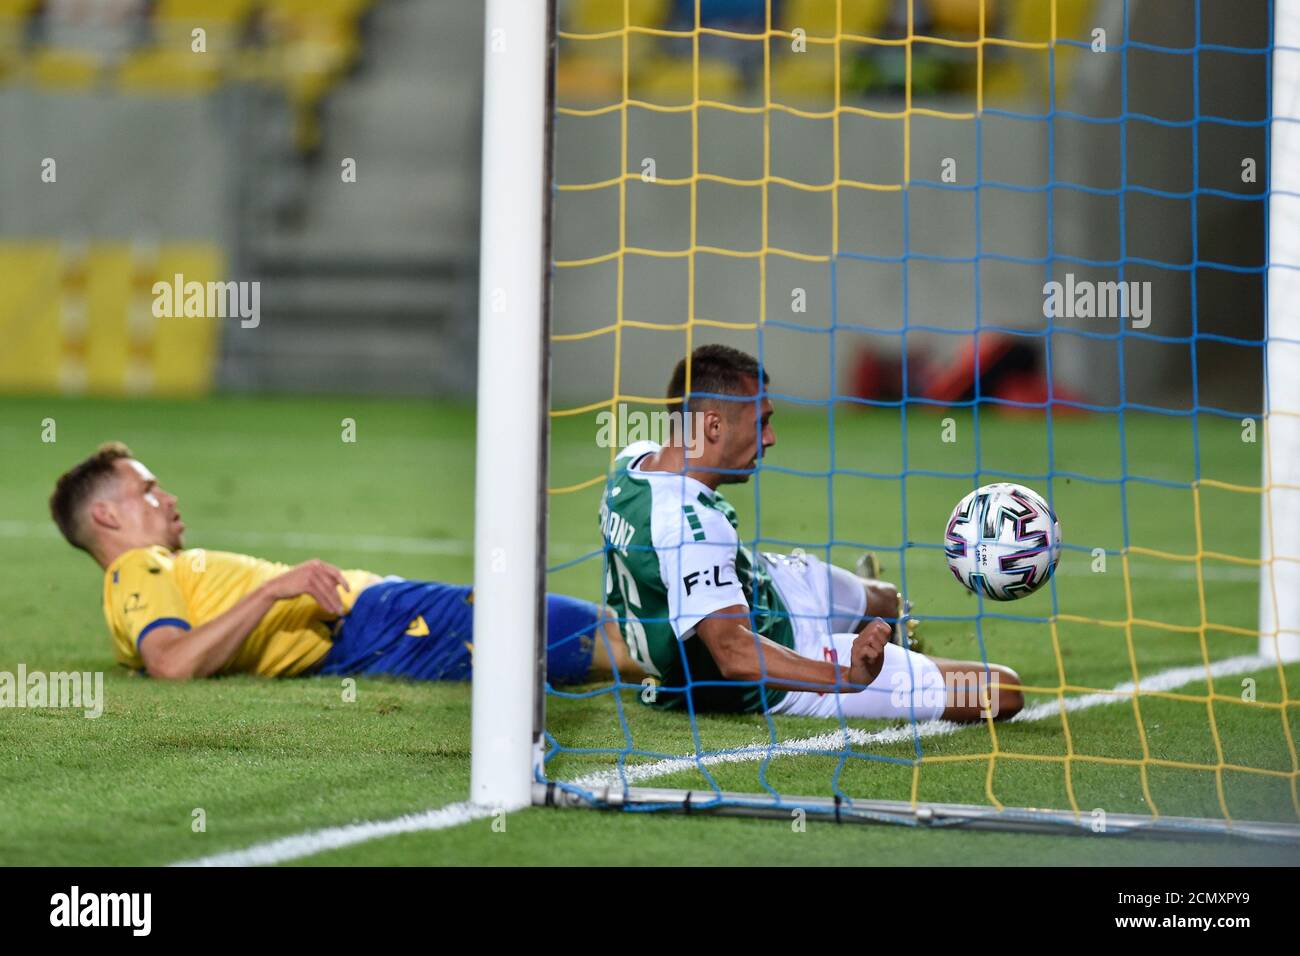 Haris Vuckic of HNK Rijeka controls a ball during the 1st leg of